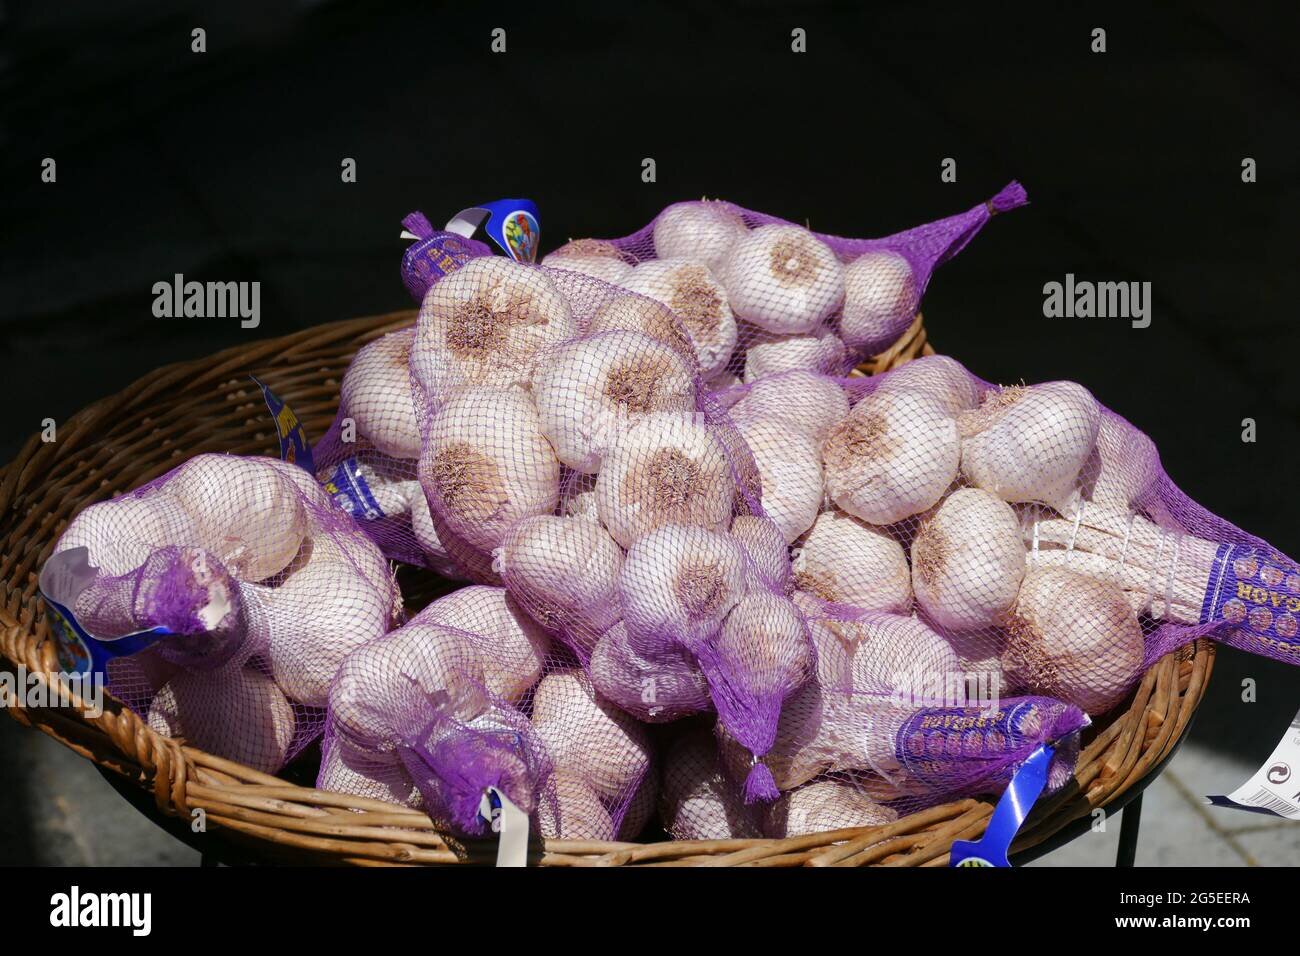 germany-munich-march-16-fresh-garlic-heads-in-plastic-net-2G5EERA.jpg